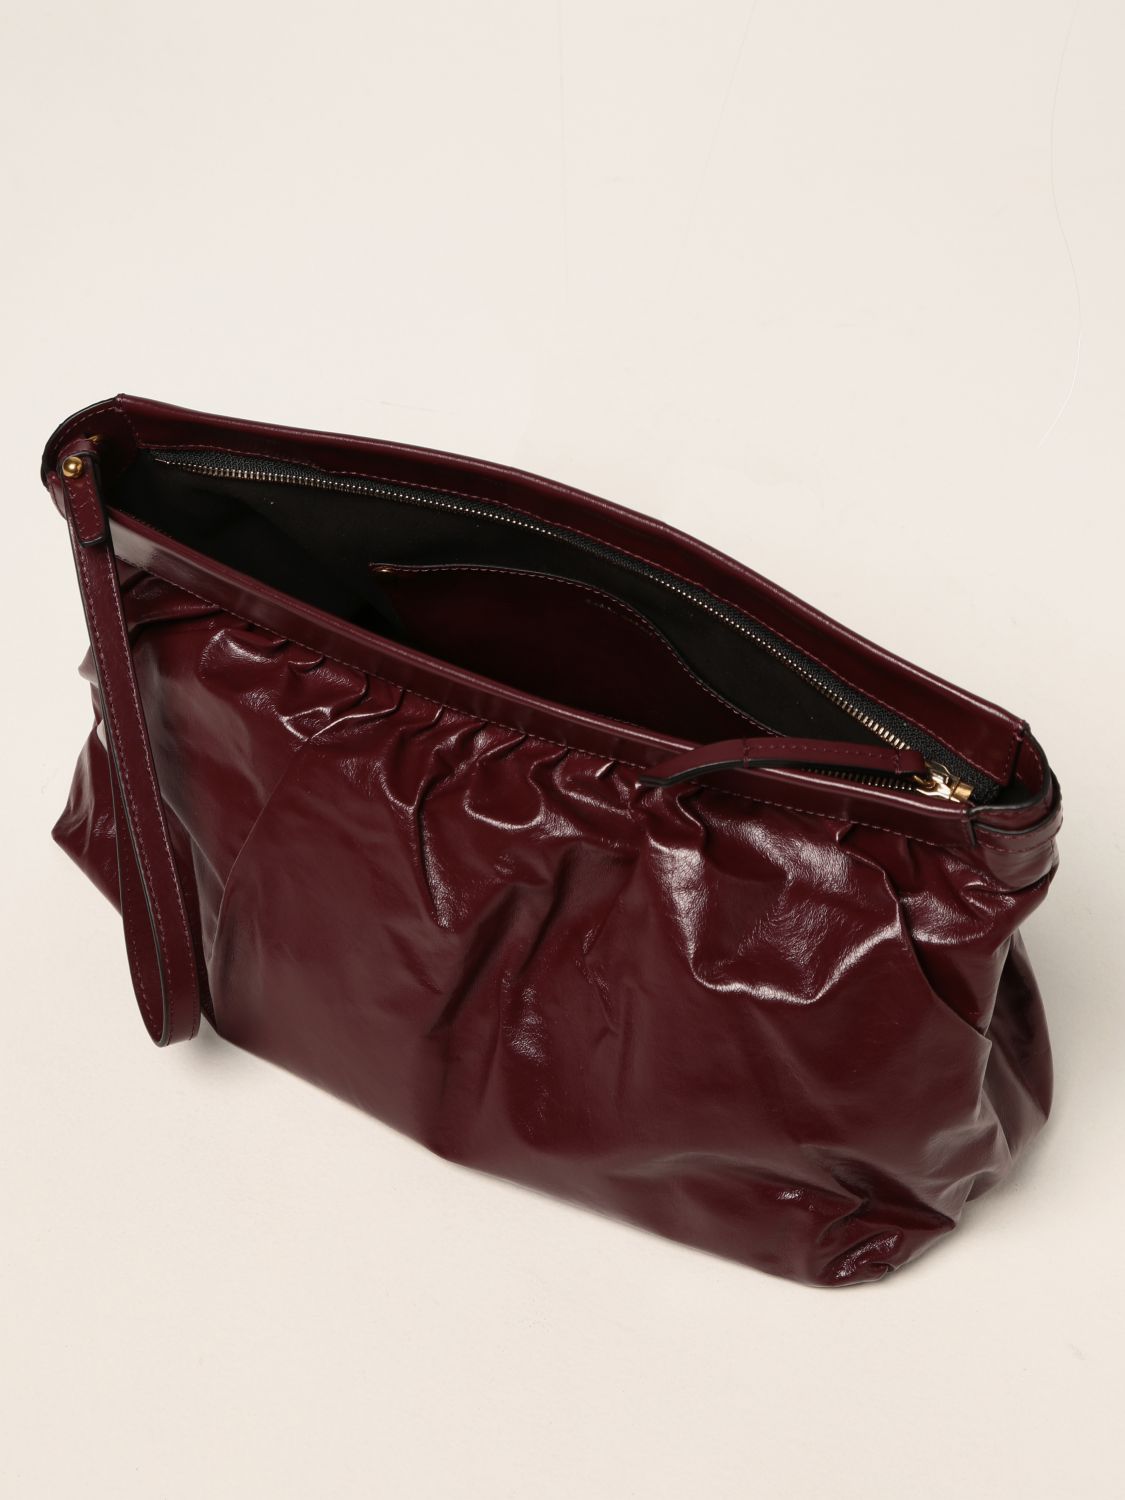 ISABEL MARANT: Luz leather bag | Clutch Isabel Marant Women Burgundy | Clutch Marant PO011821A052M GIGLIO.COM